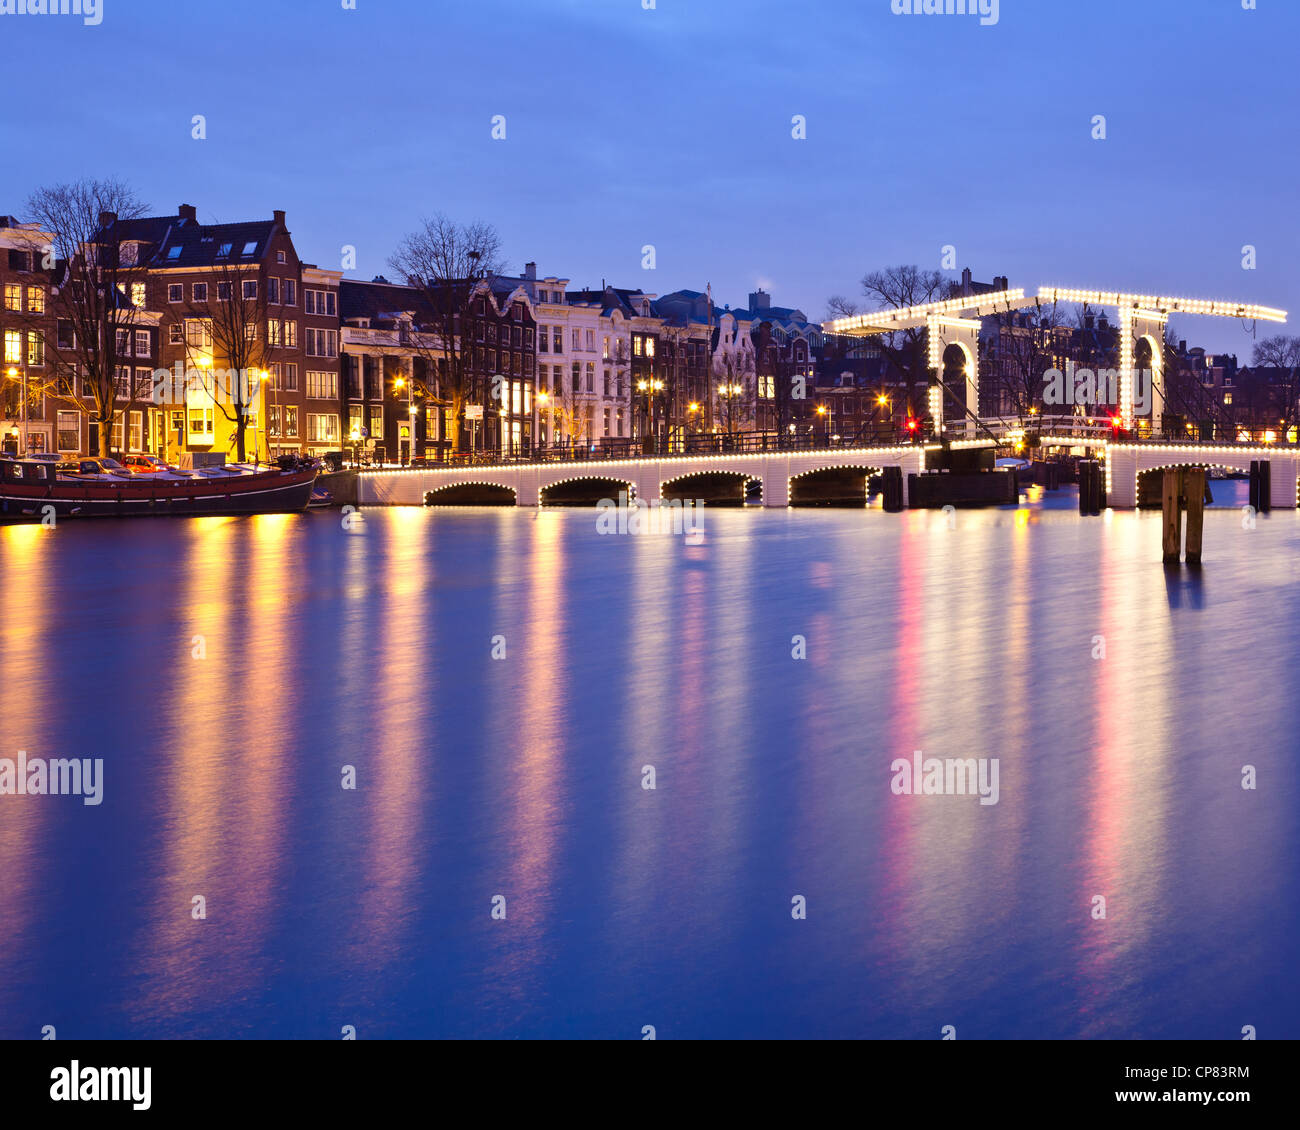 Magere Brug ou Skinny Bridge à Amsterdam Banque D'Images